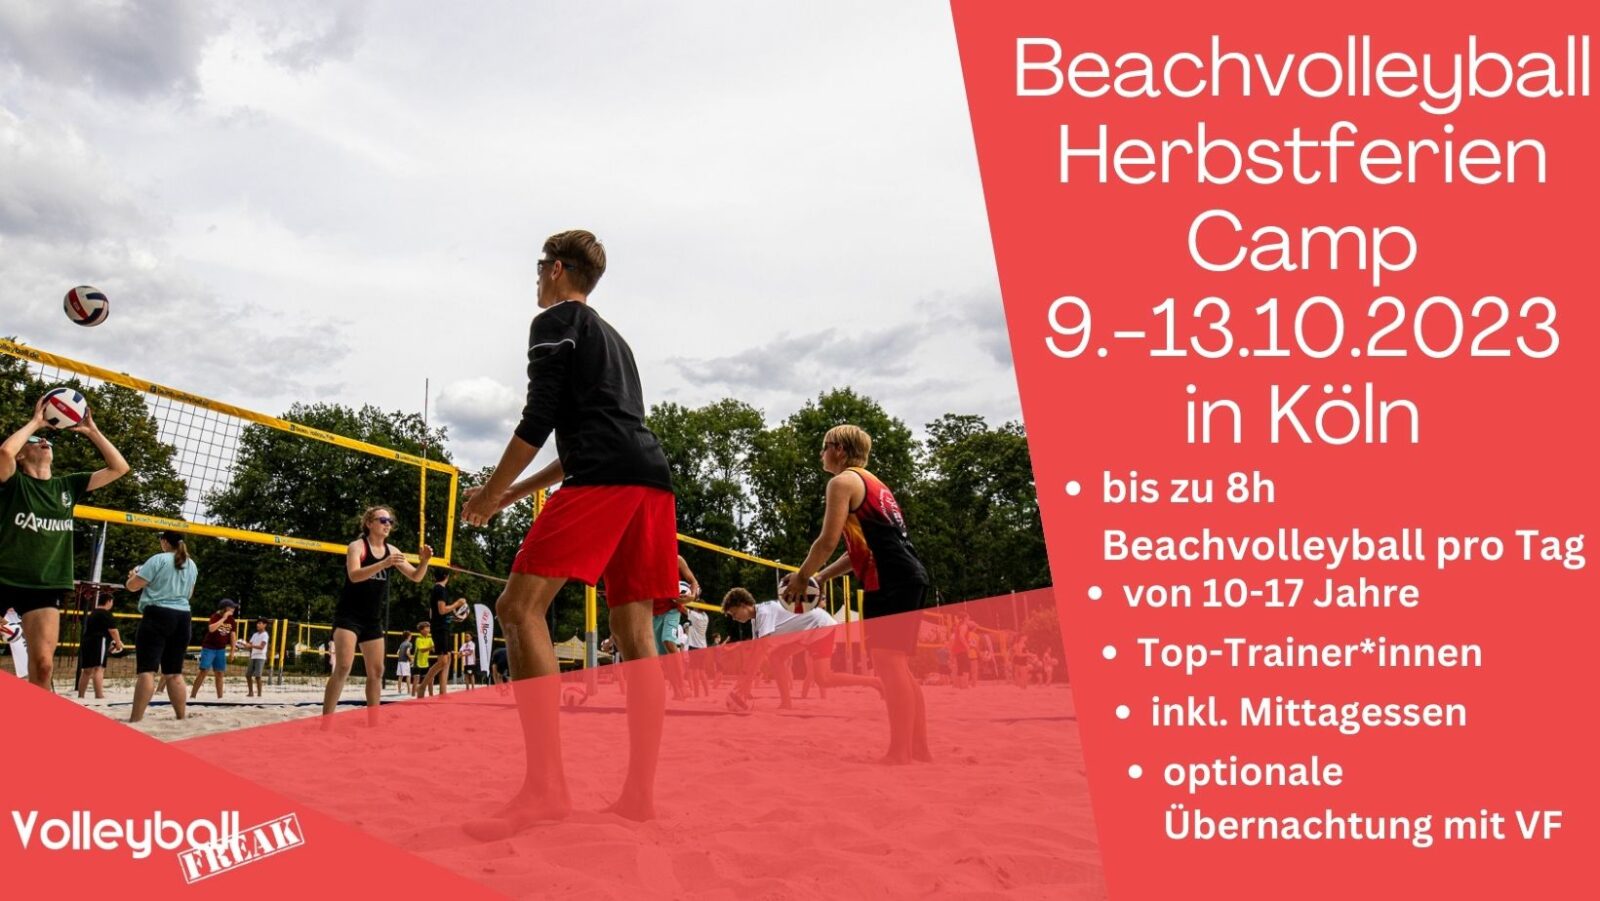 Beachvolleyball Herbstferiencamp 9.-13.10.2023 in Köln